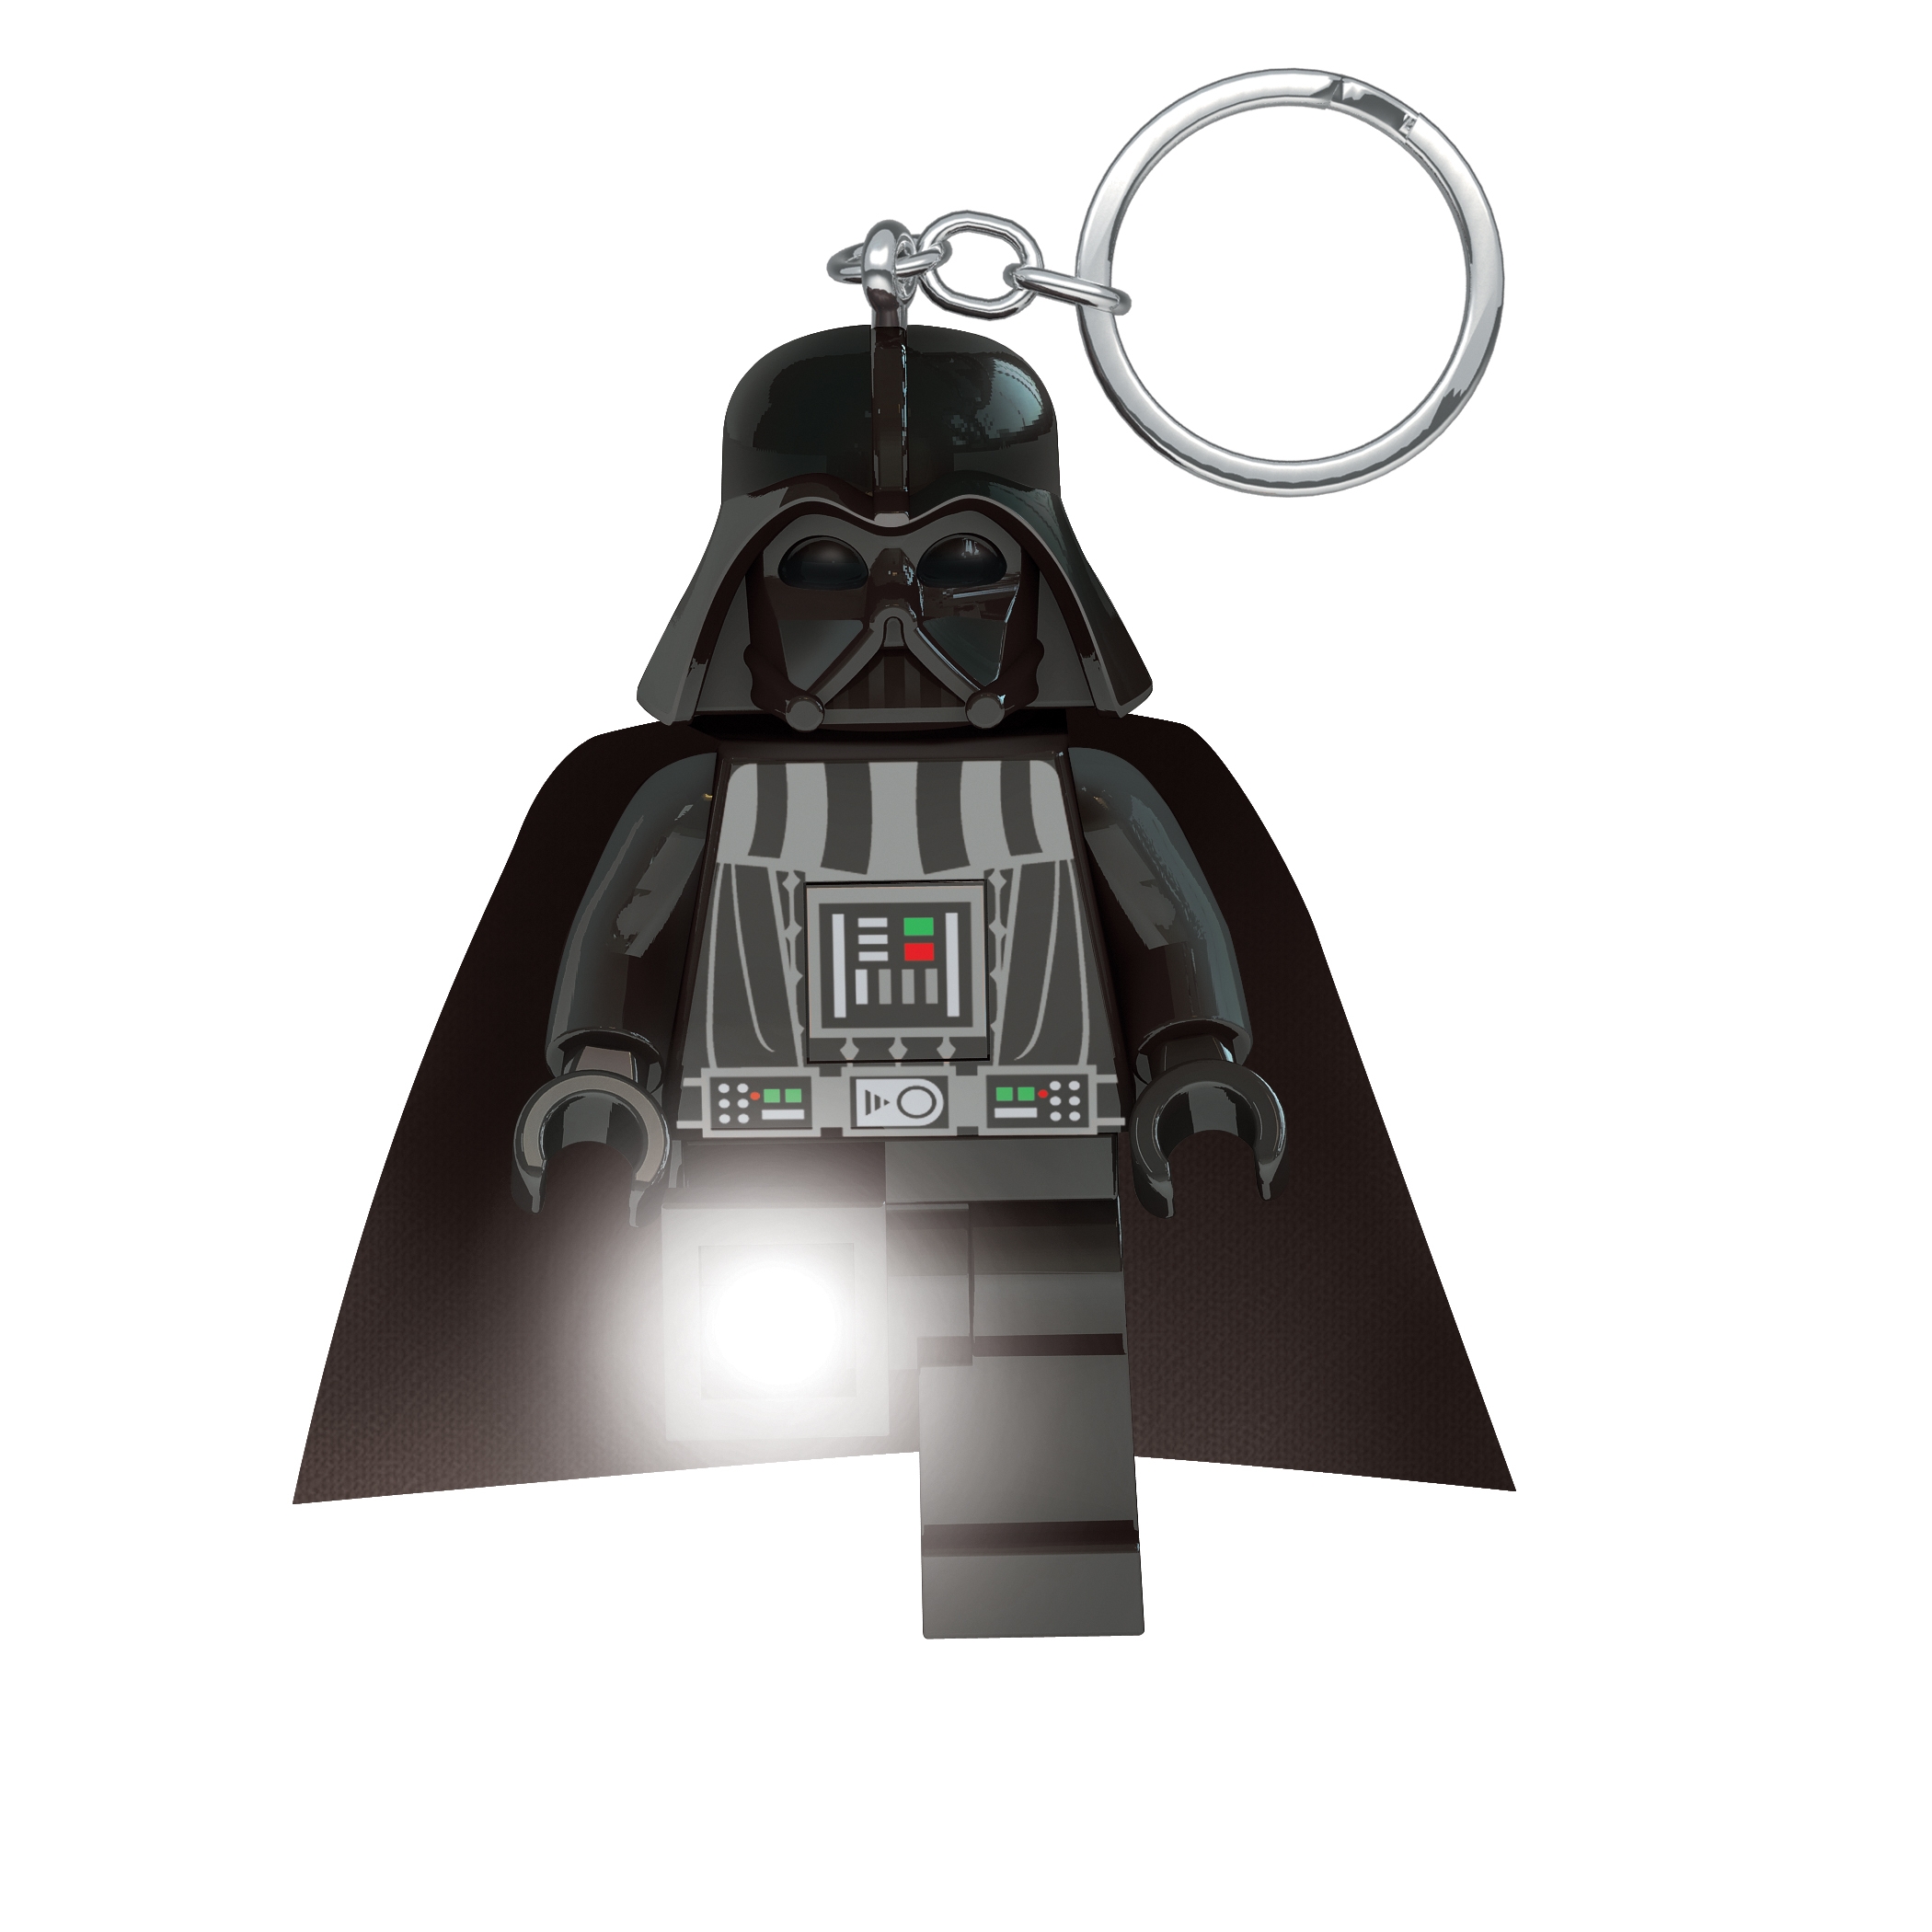 LEGO Star Wars - Han Solo - Portachiavi LED - torcia a led